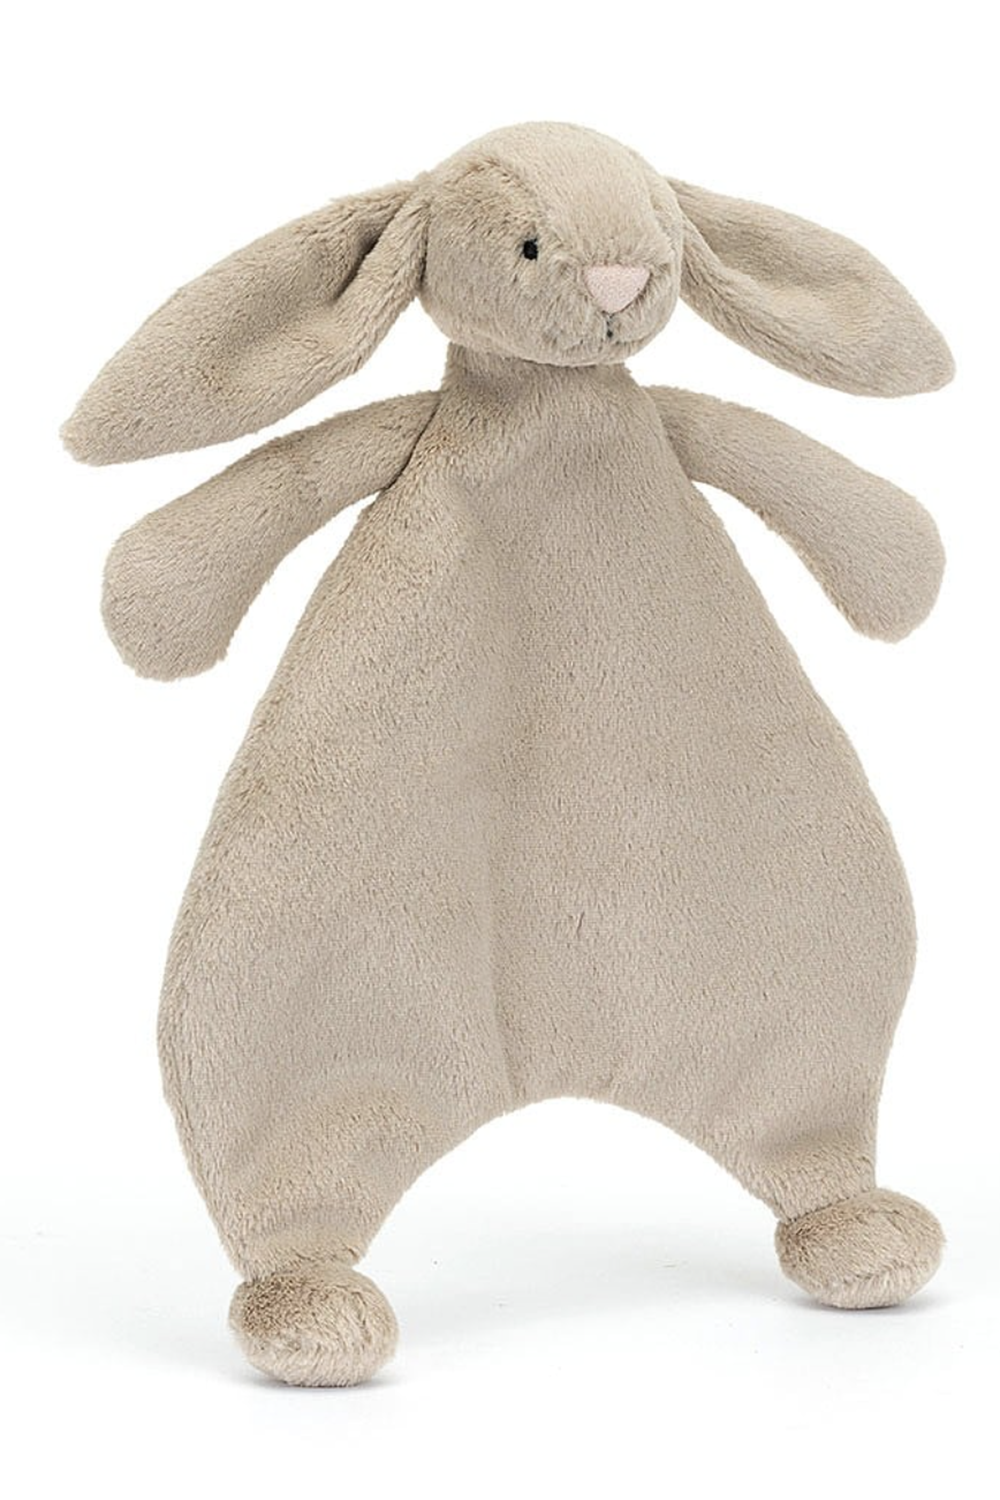 JELLYCAT Bashful Comforter - Beige Bunny